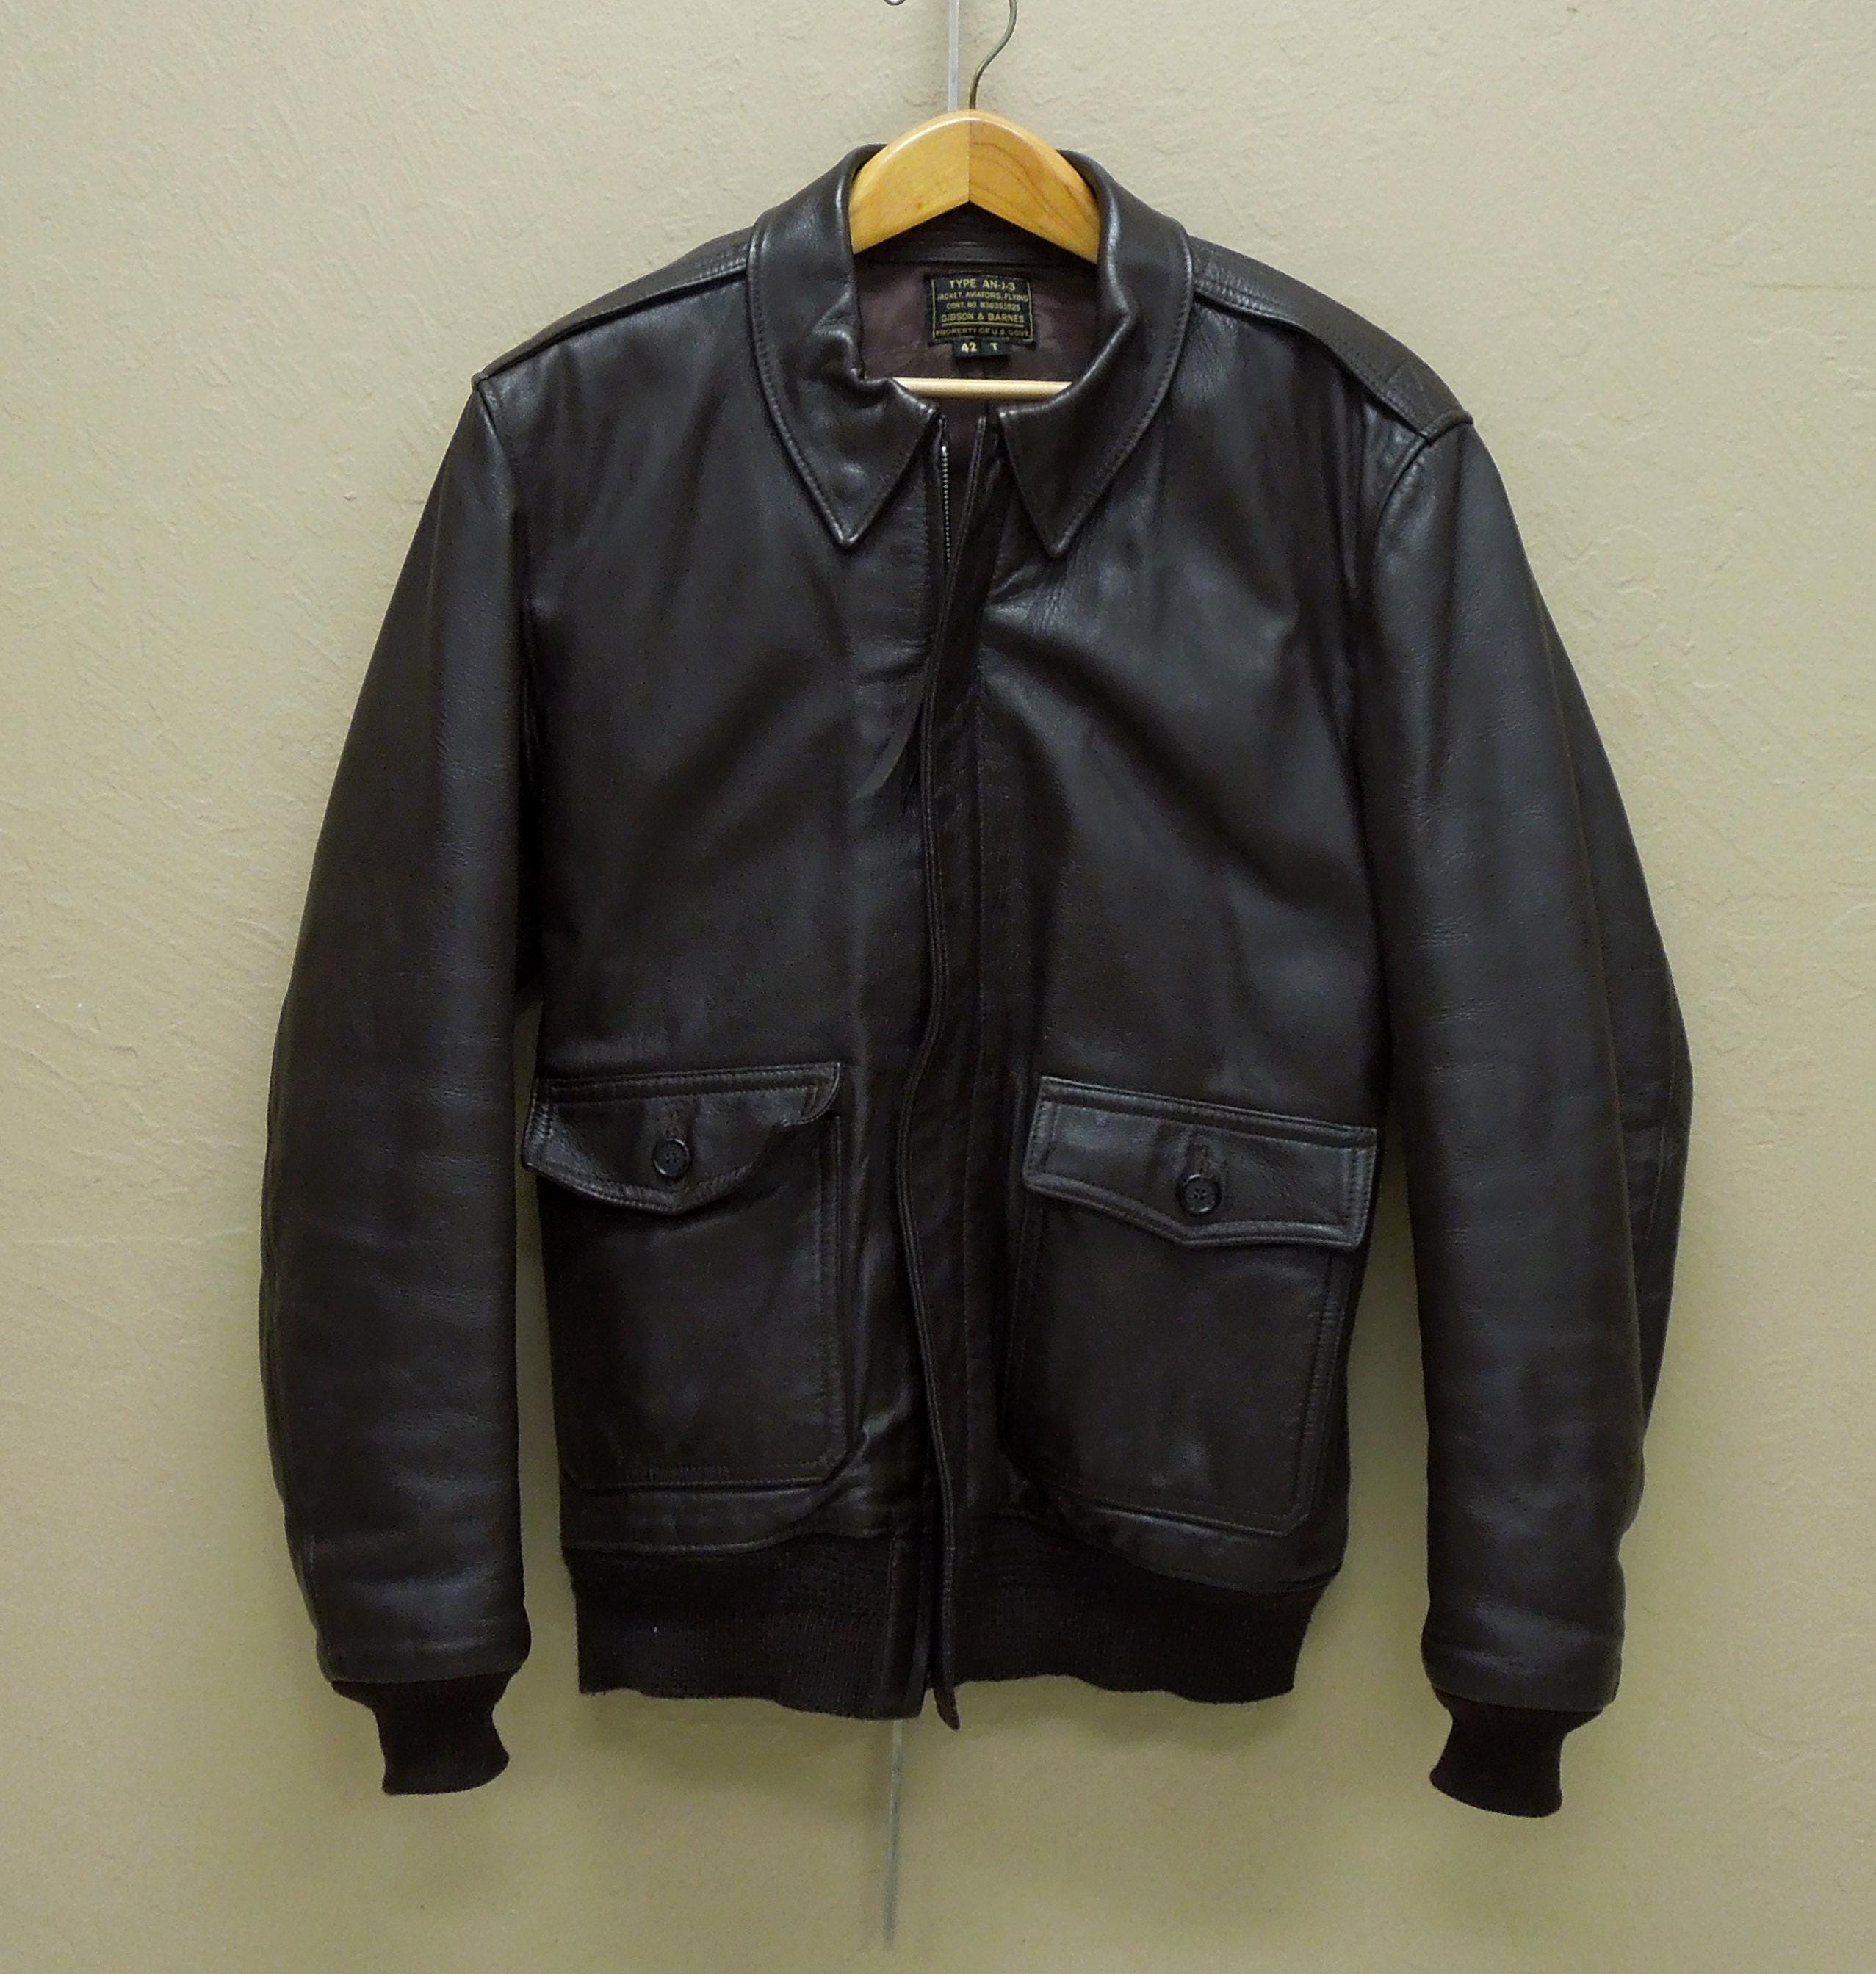 AN-J-3 Copy? | Vintage Leather Jackets Forum